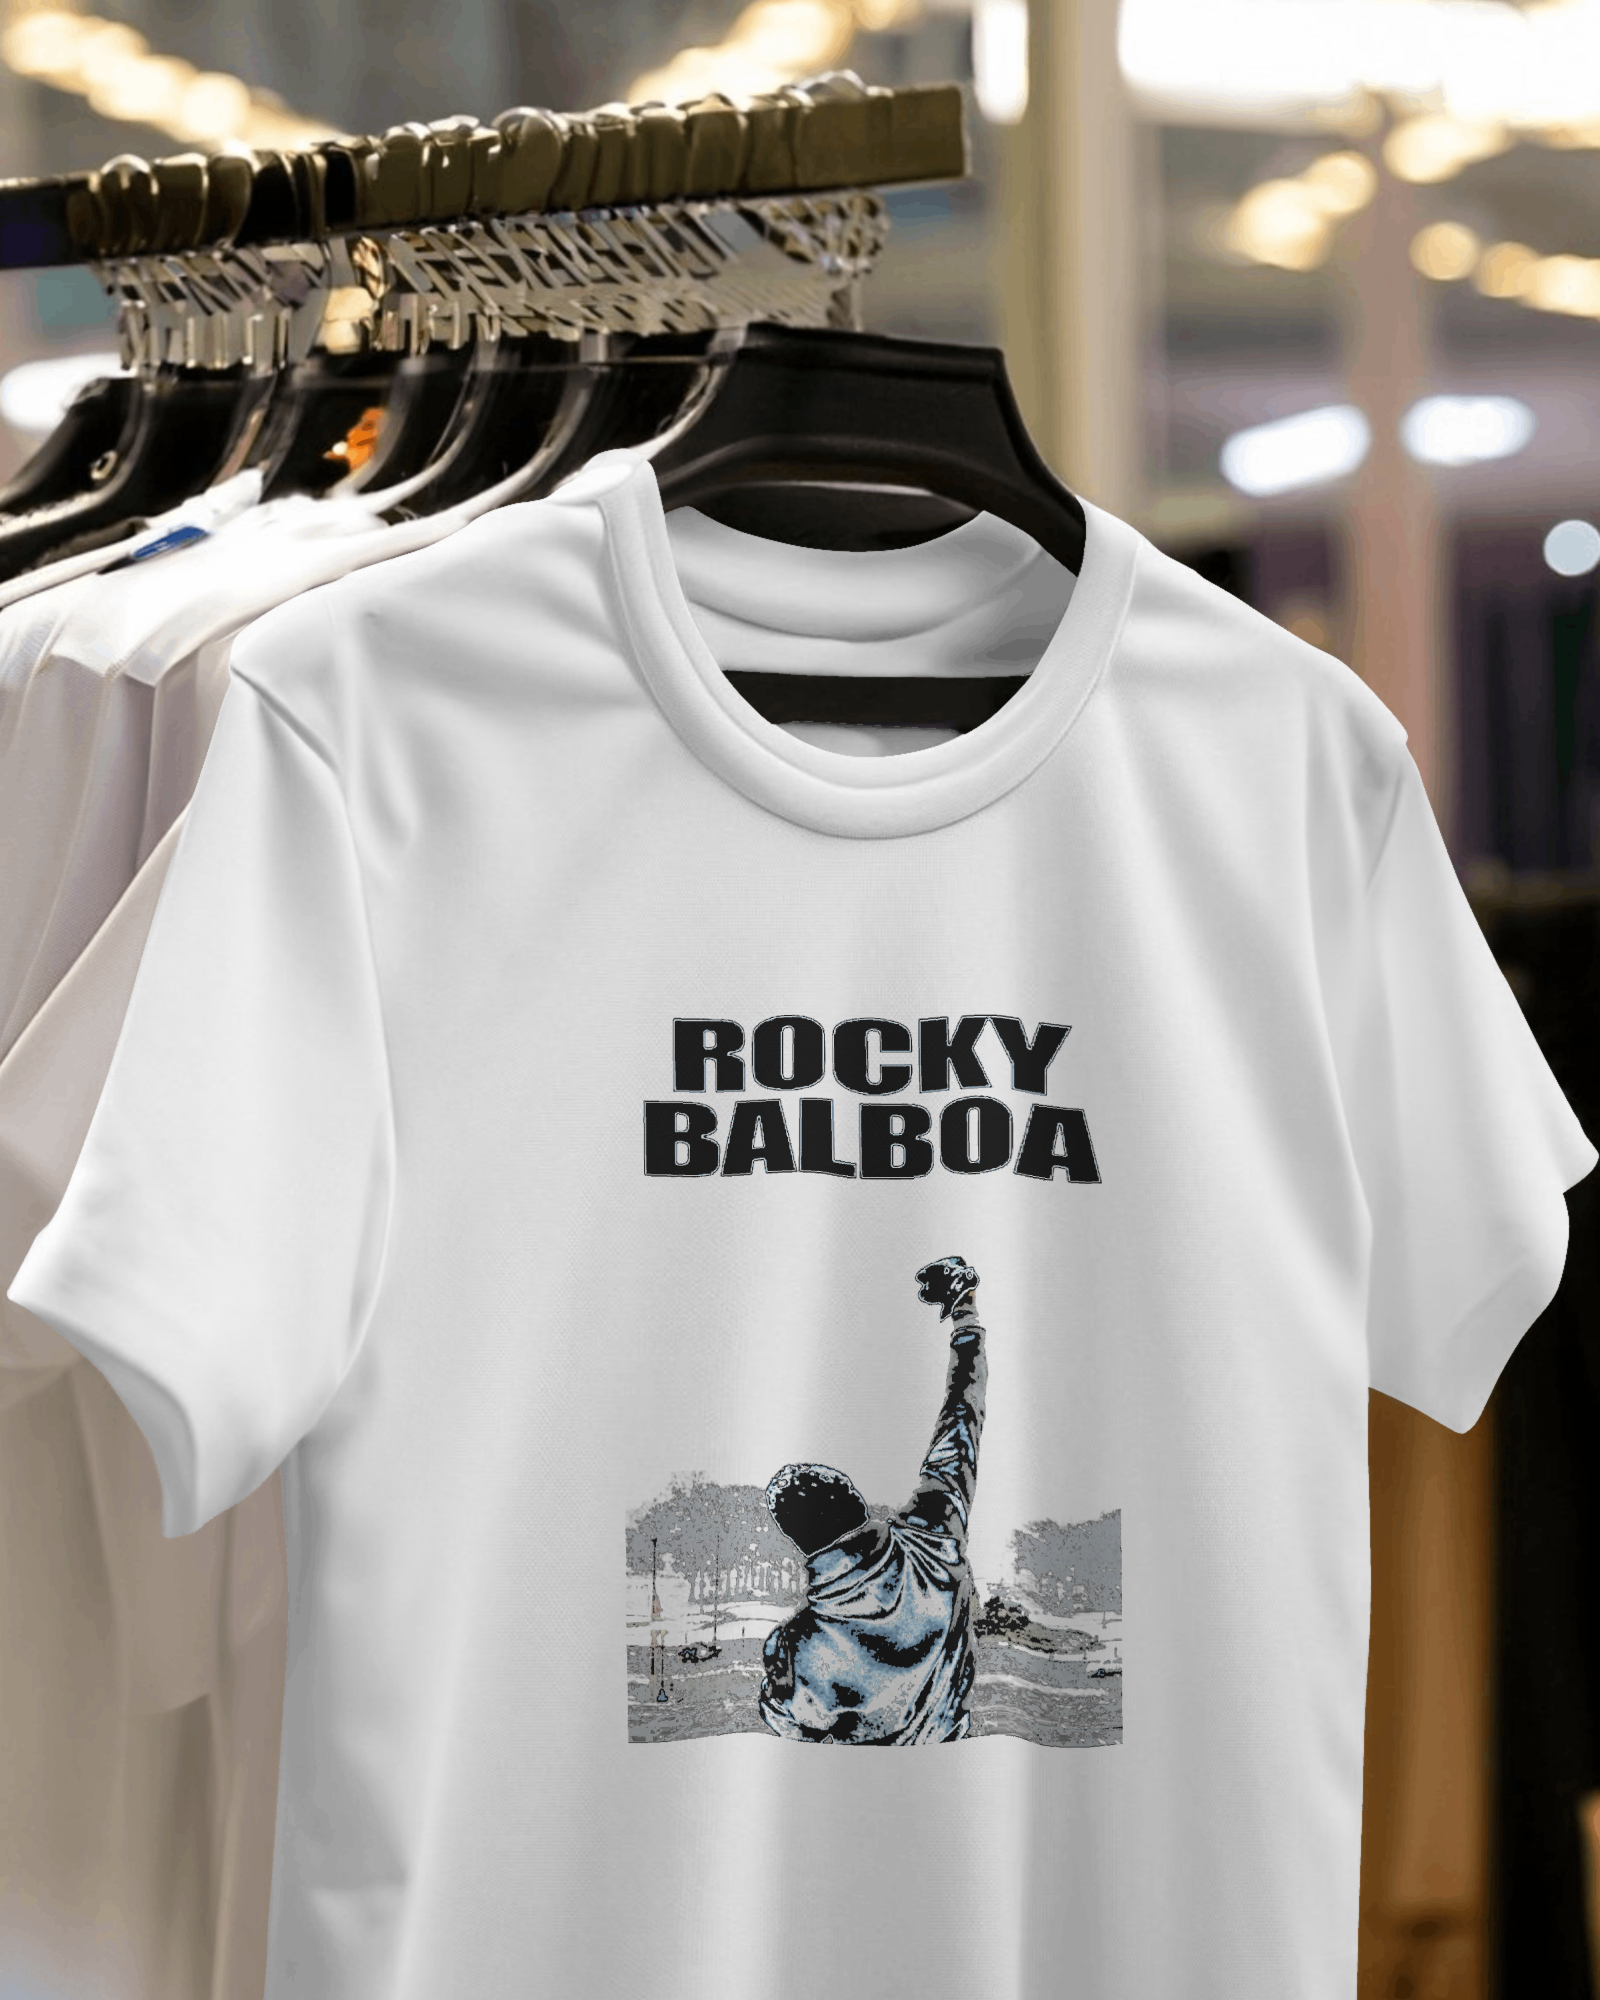 "ROCKY BALBOA" Poster Printed Tshirt